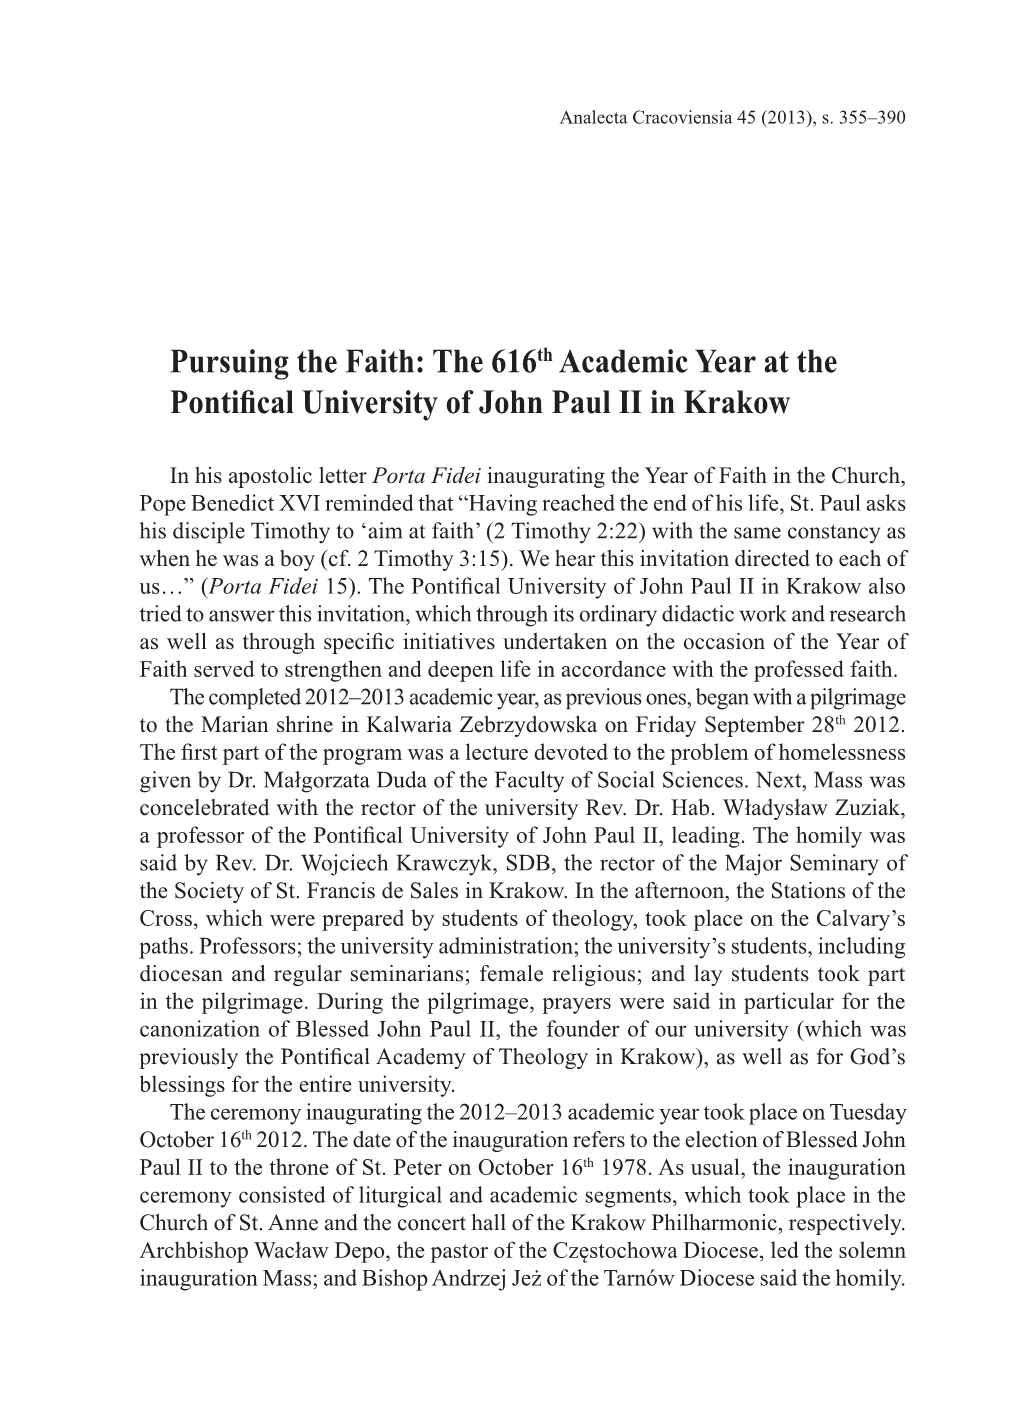 The 616Th Academic Year at the Pontifical University of John Paul II in Krakow